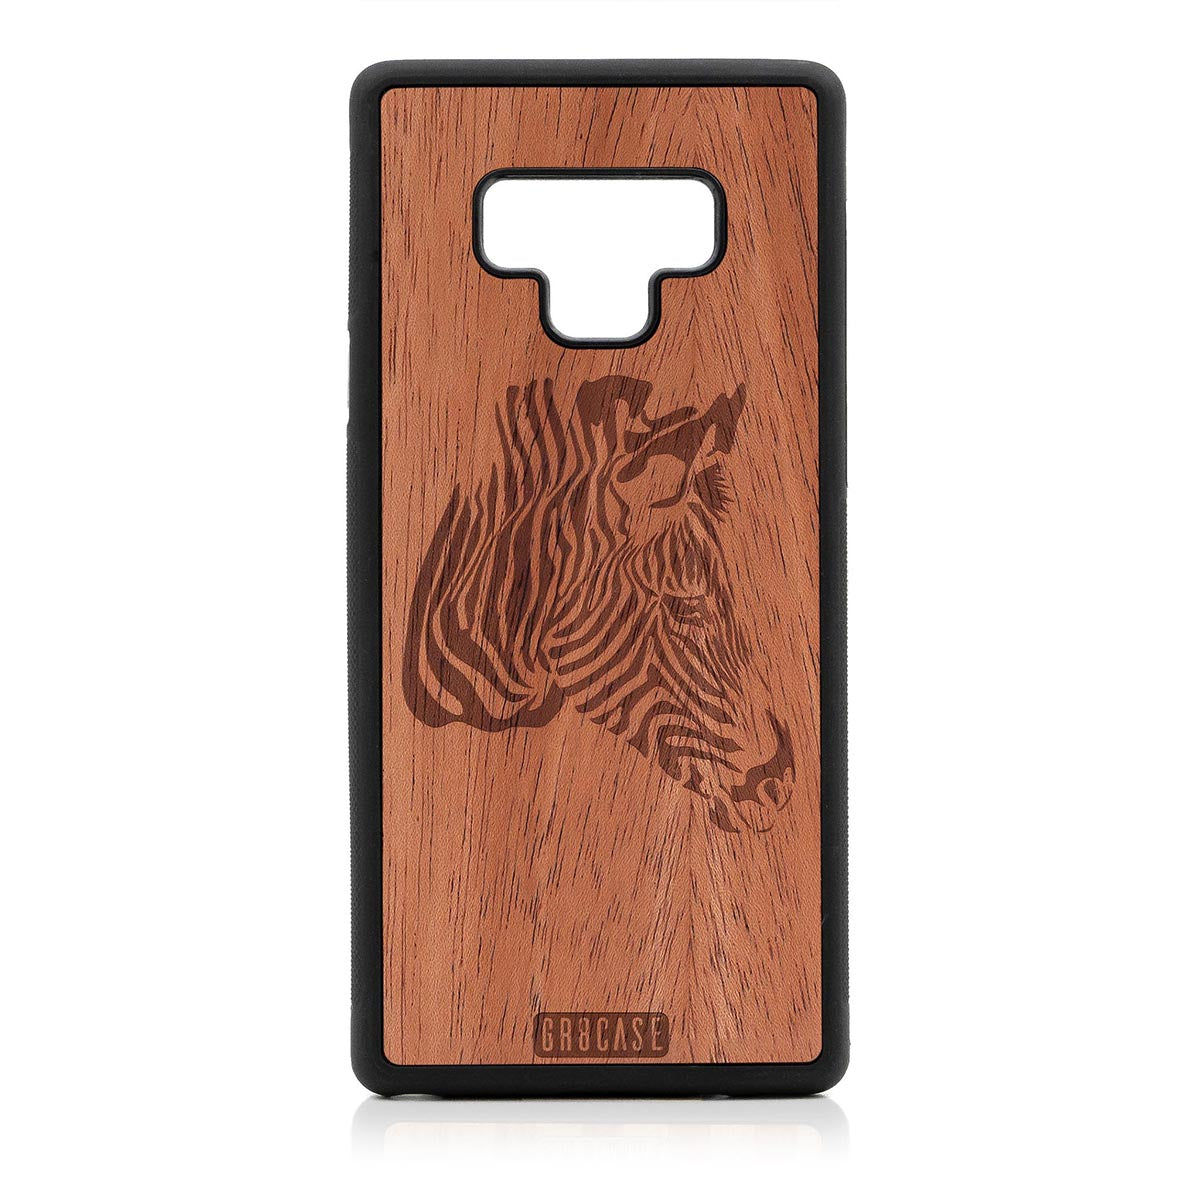 Zebra Design Wood Case For Samsung Galaxy Note 9